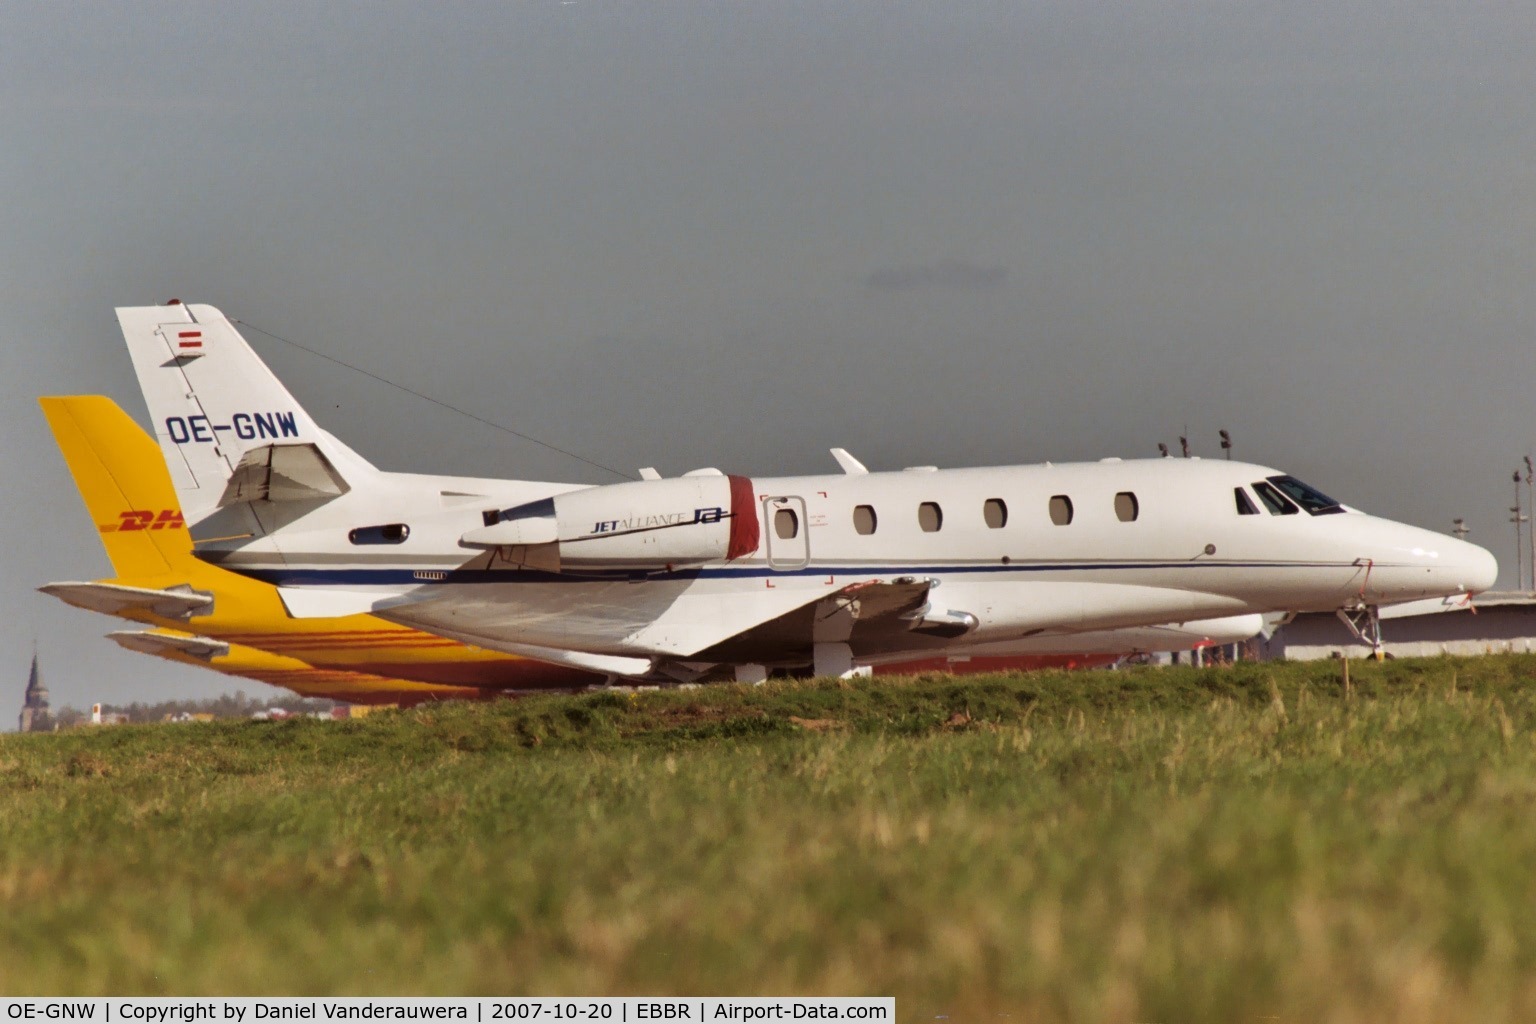 OE-GNW, 2003 Cessna 560XL Citation Excel C/N 560-5339, parked on General Aviation apron (Abelag)